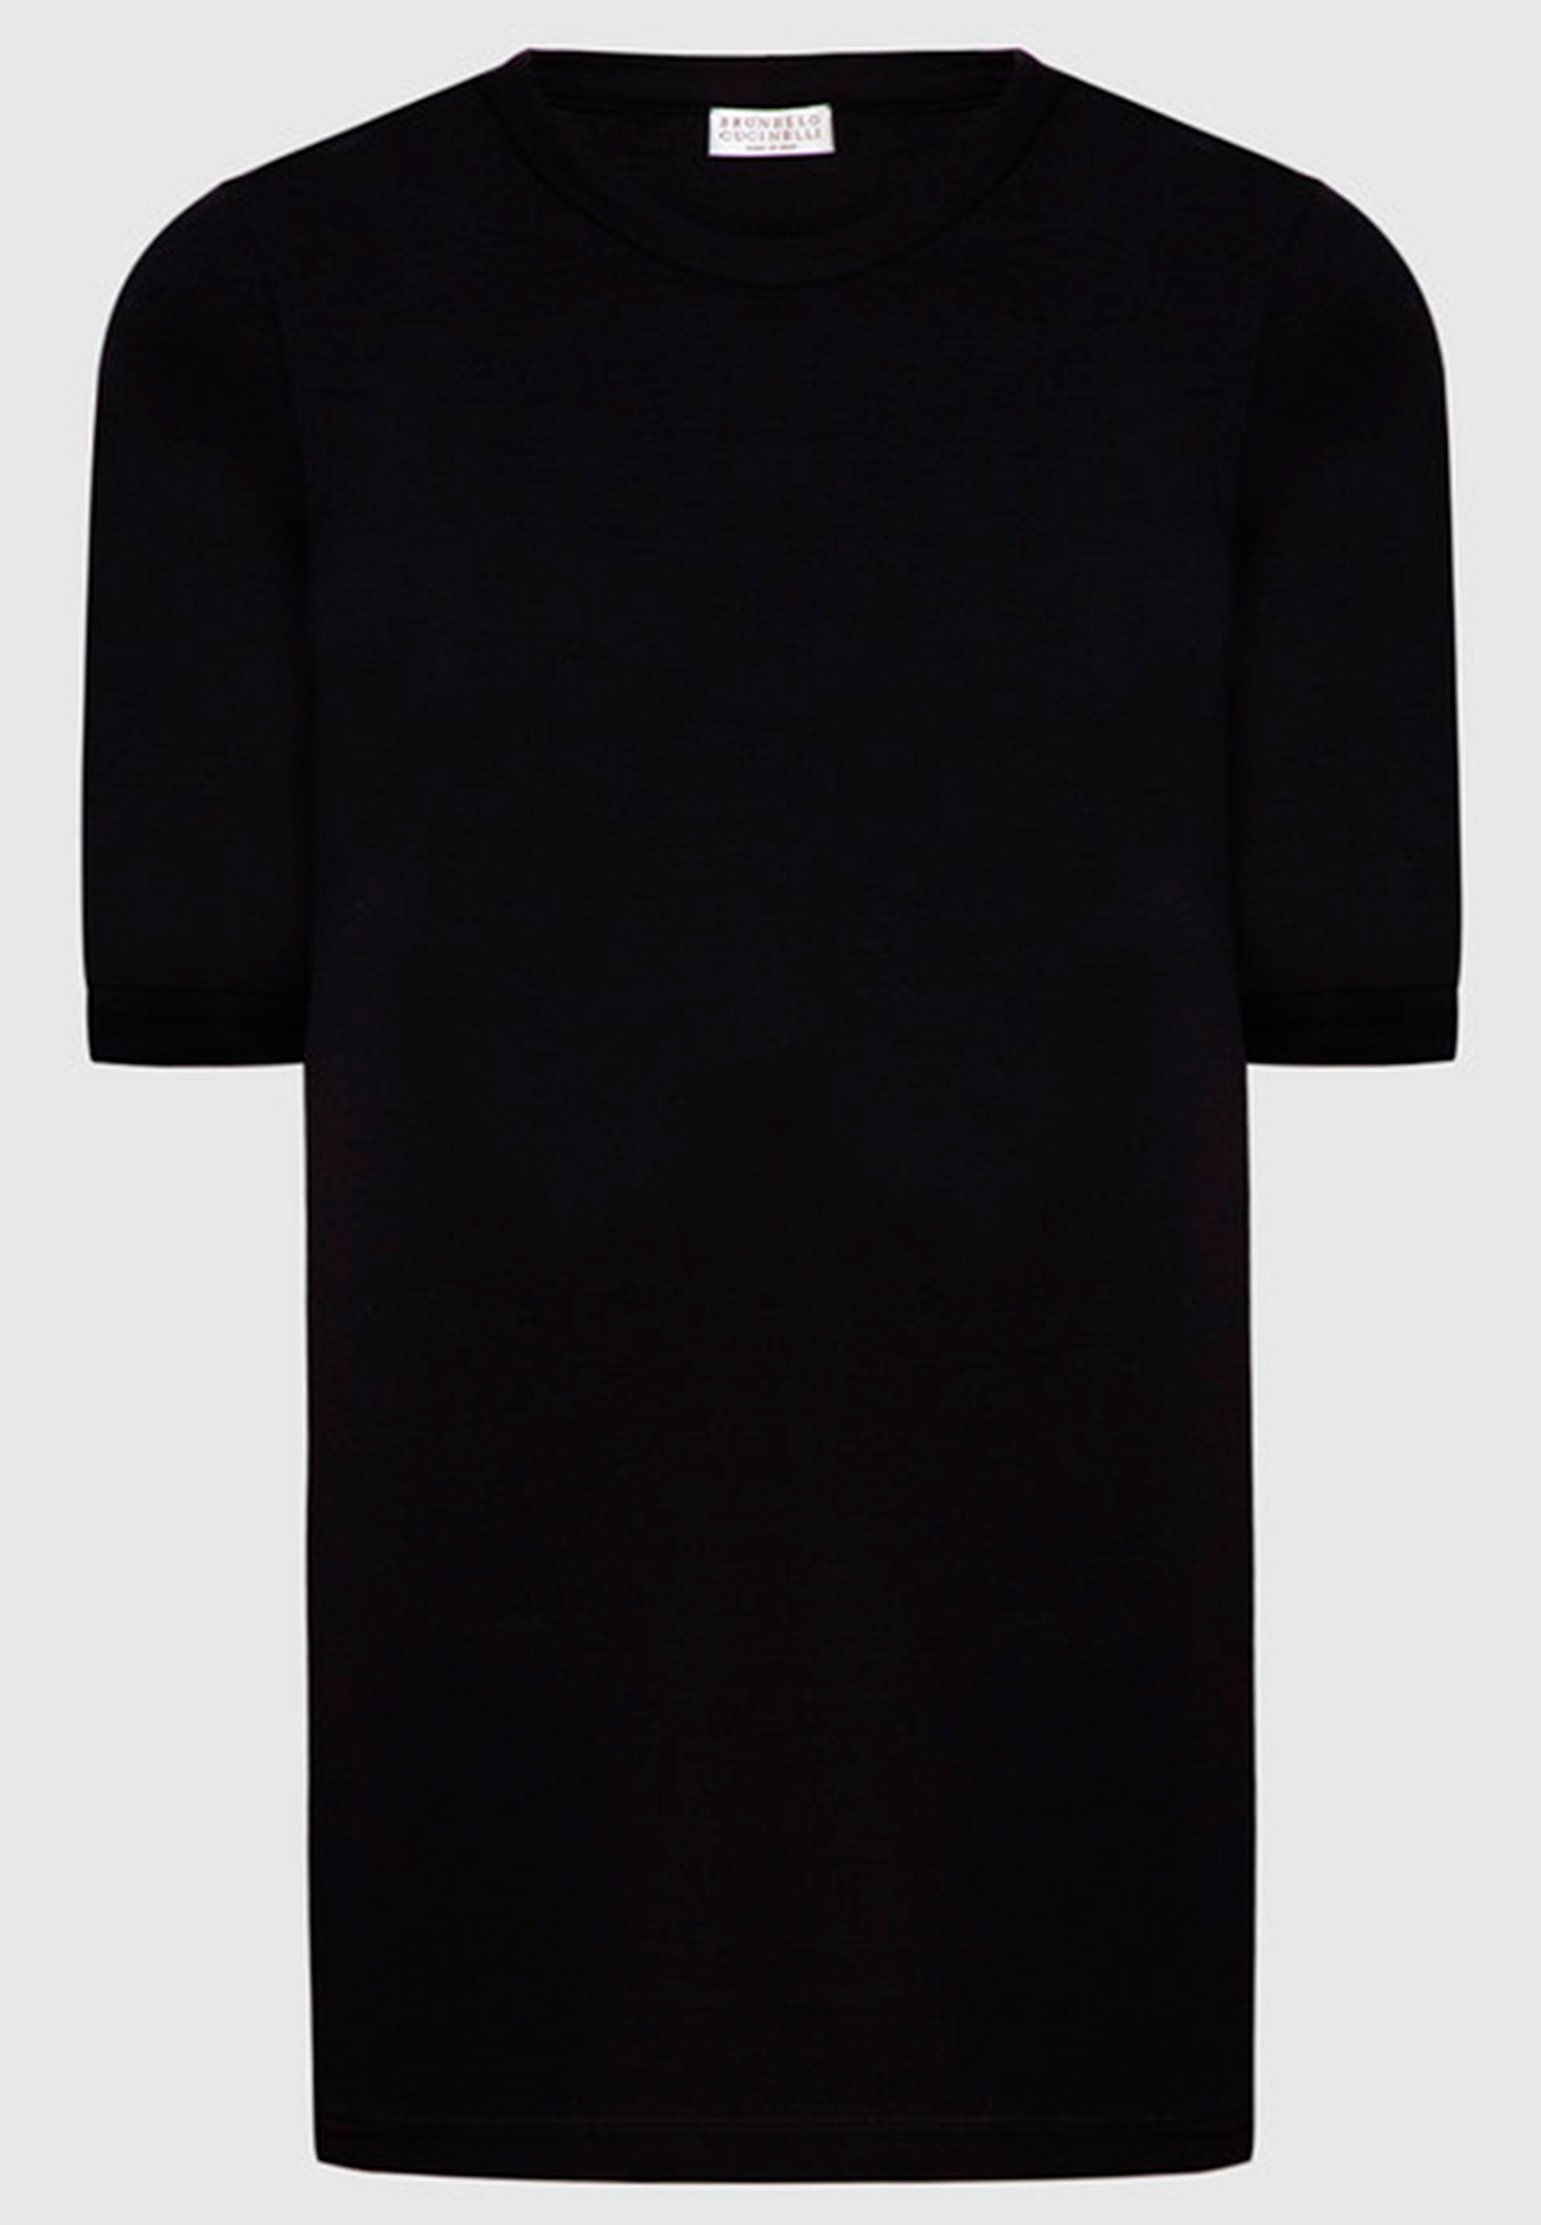 T-Shirt BRUNELLO CUCINELLI Color: black (Code: 634) in online store Allure